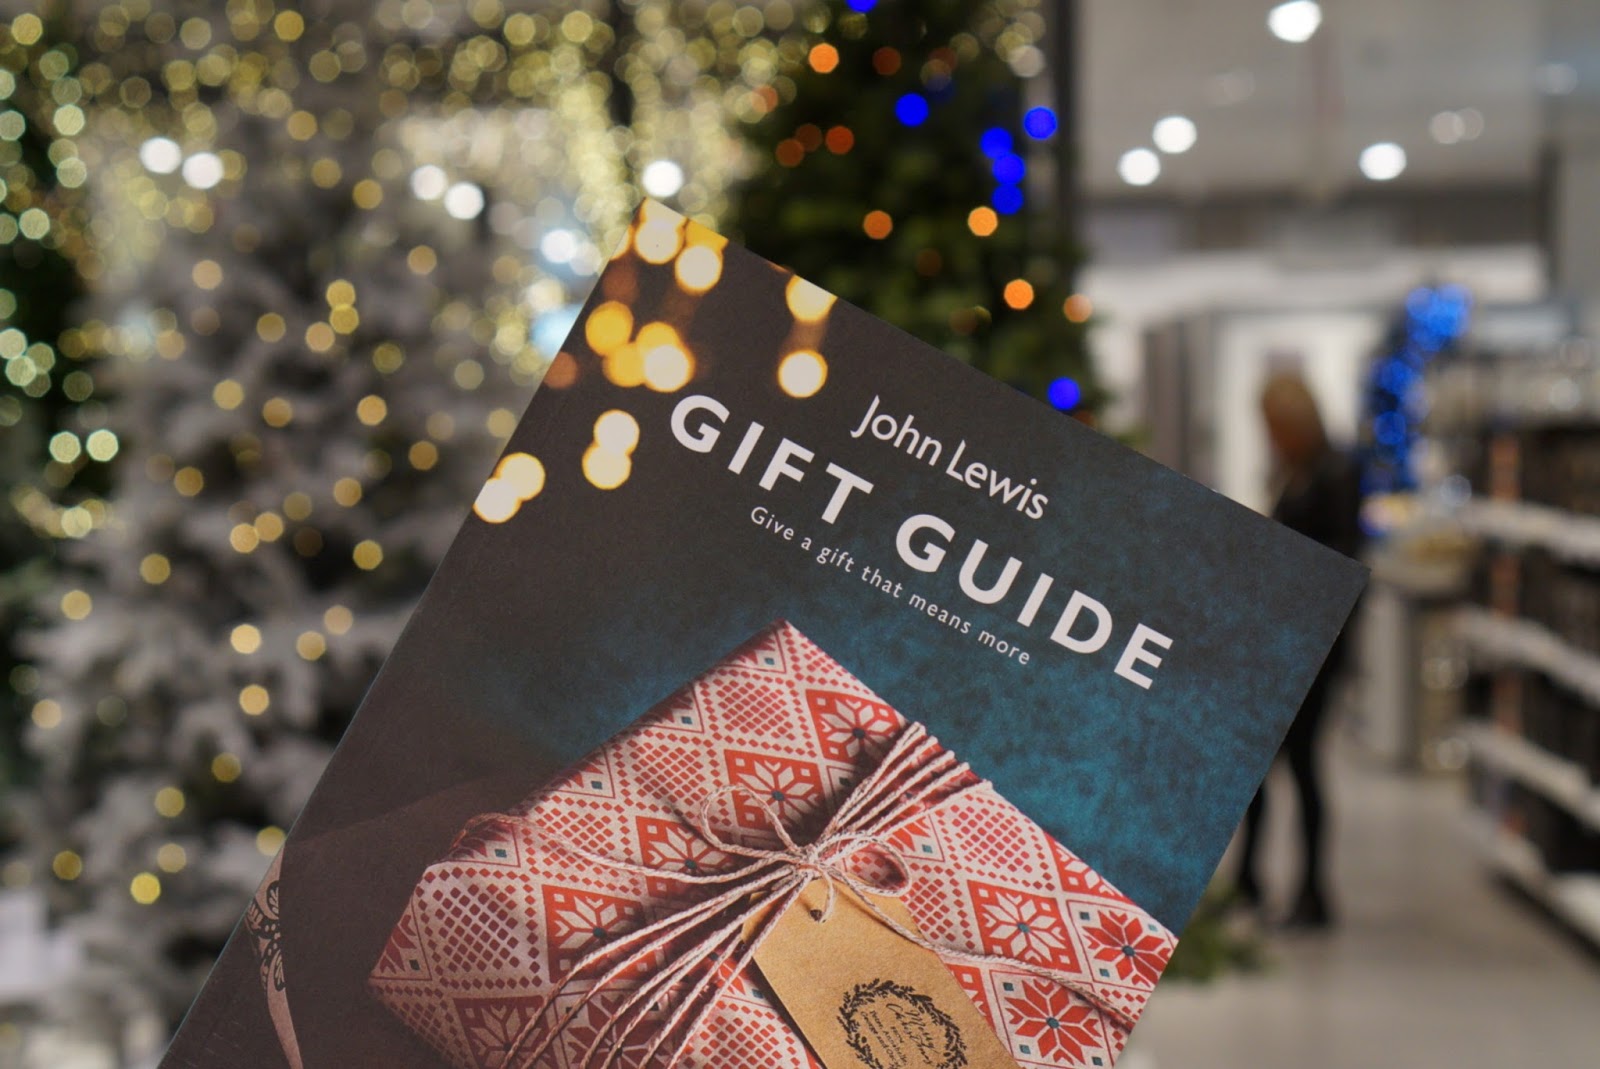 John Lewis Christmas Gift Guide